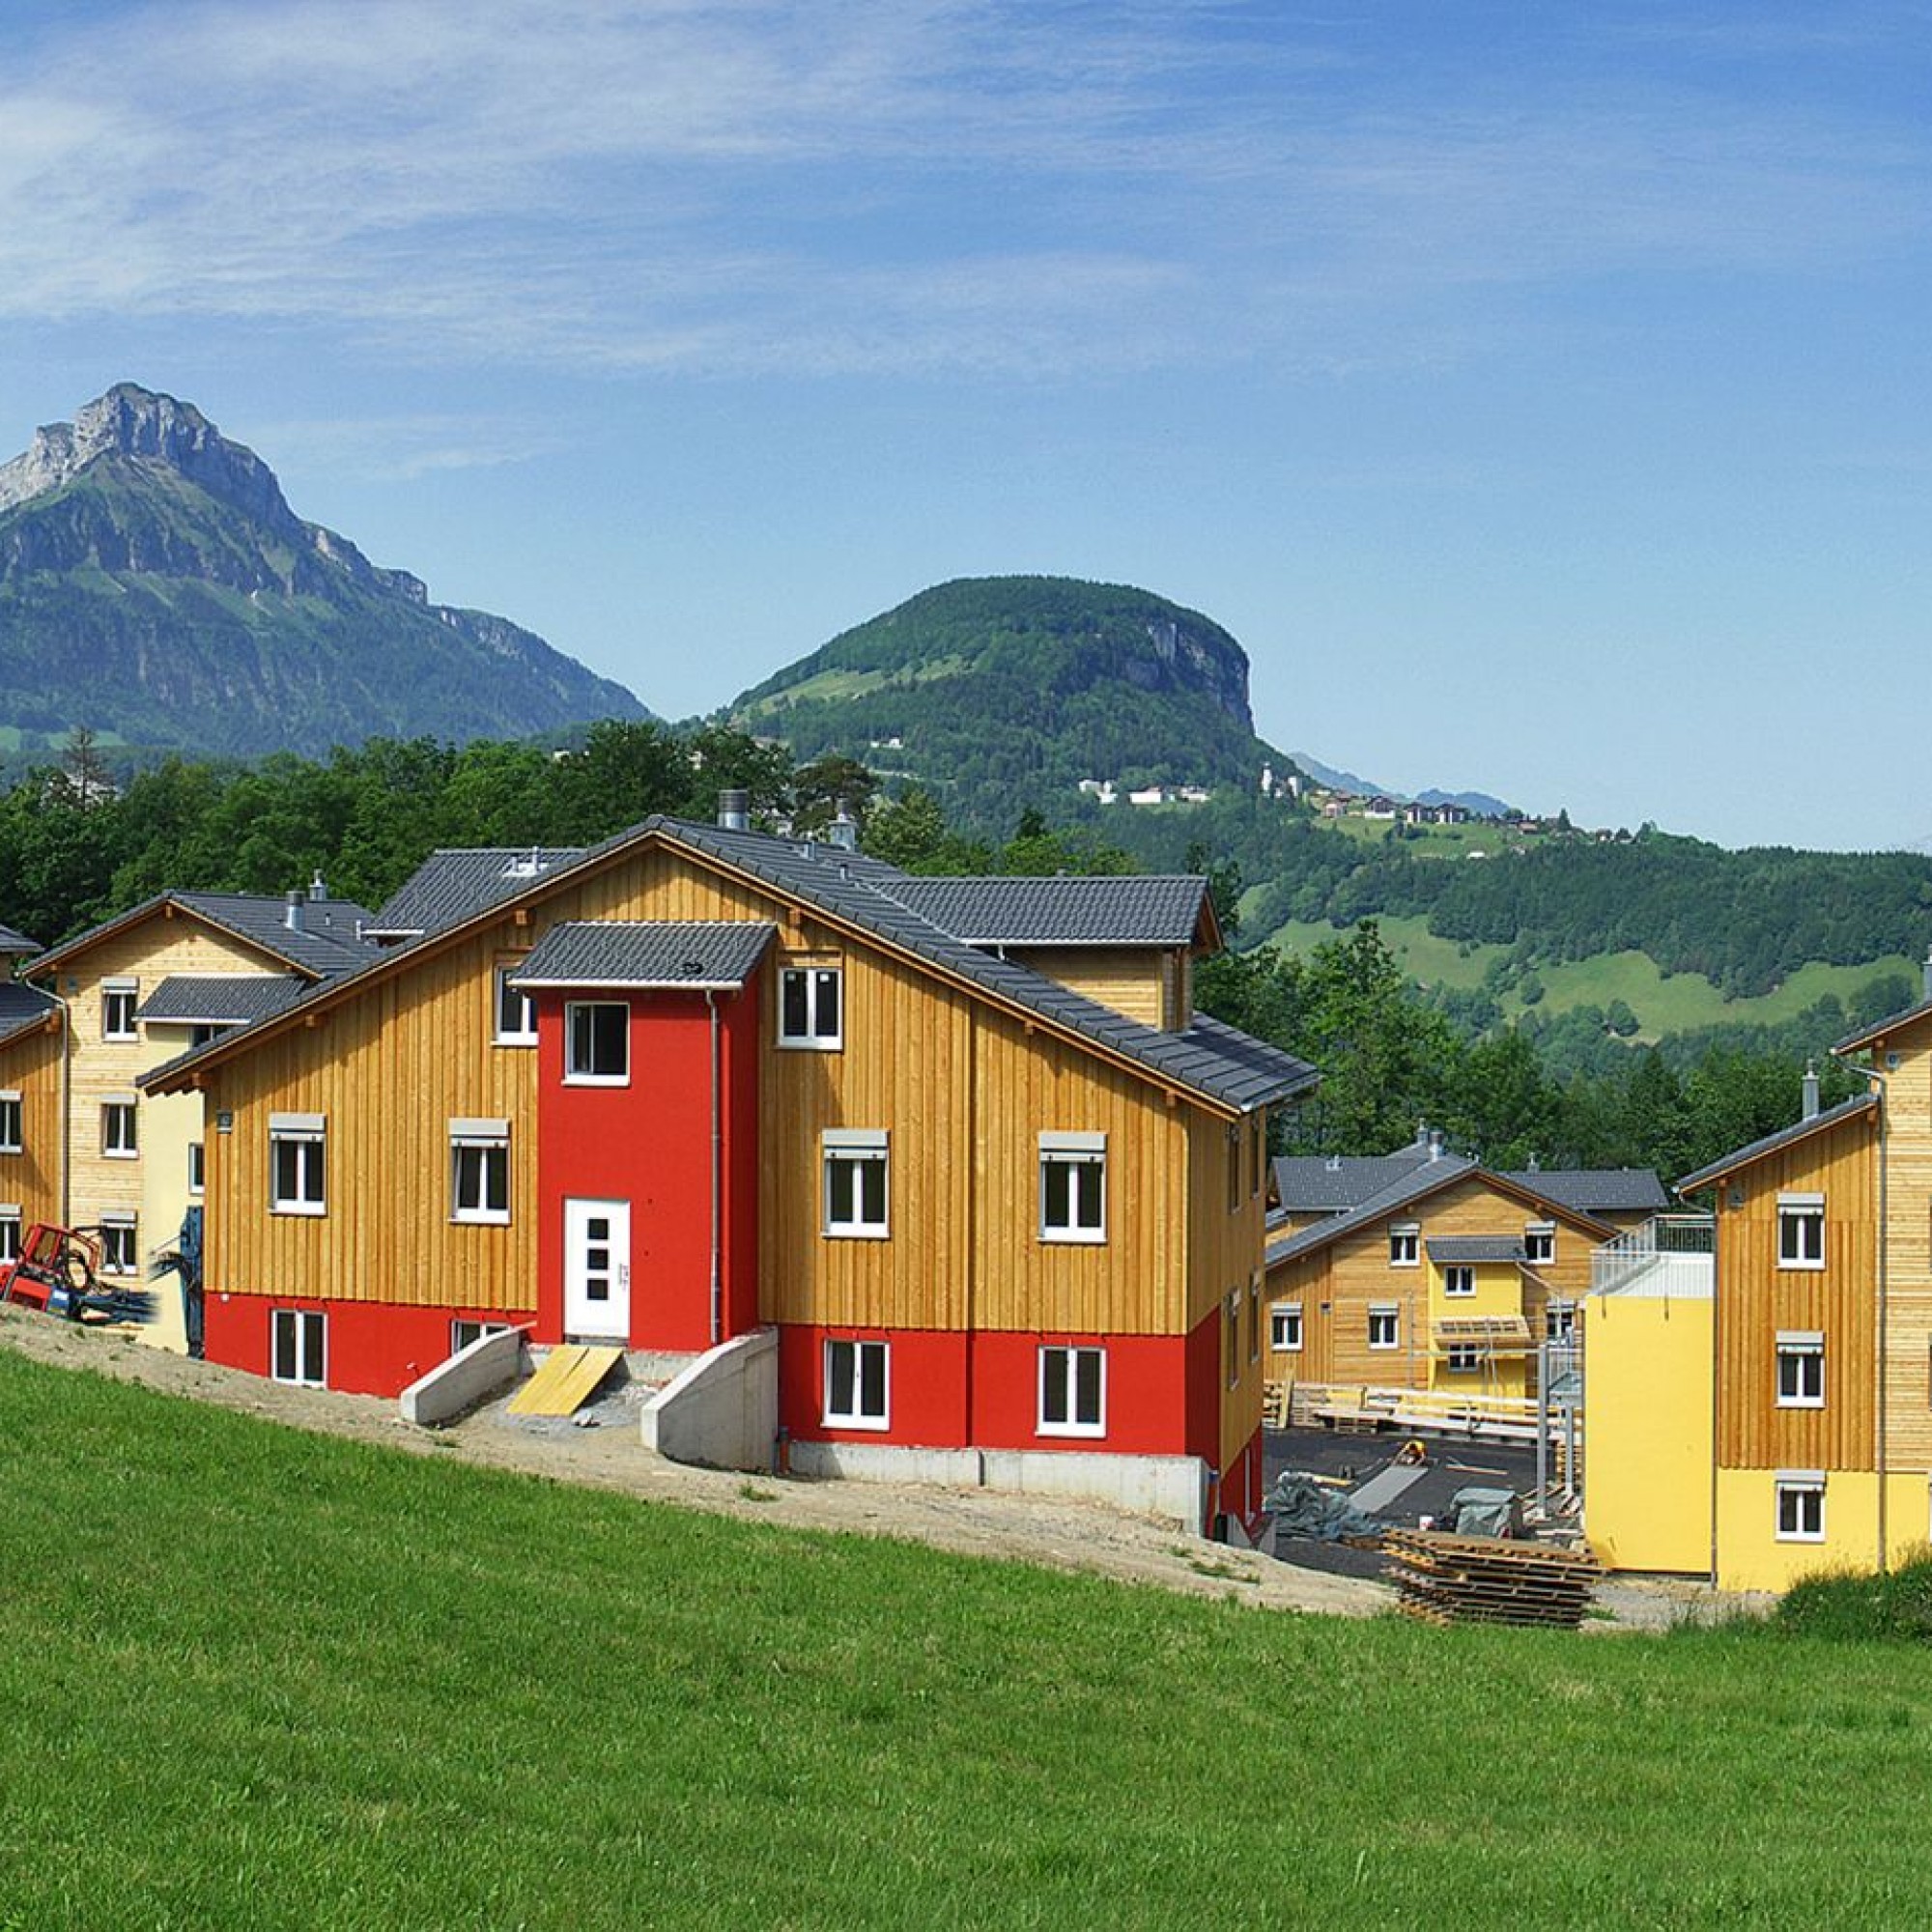 SwissHoliday Park in Morschach